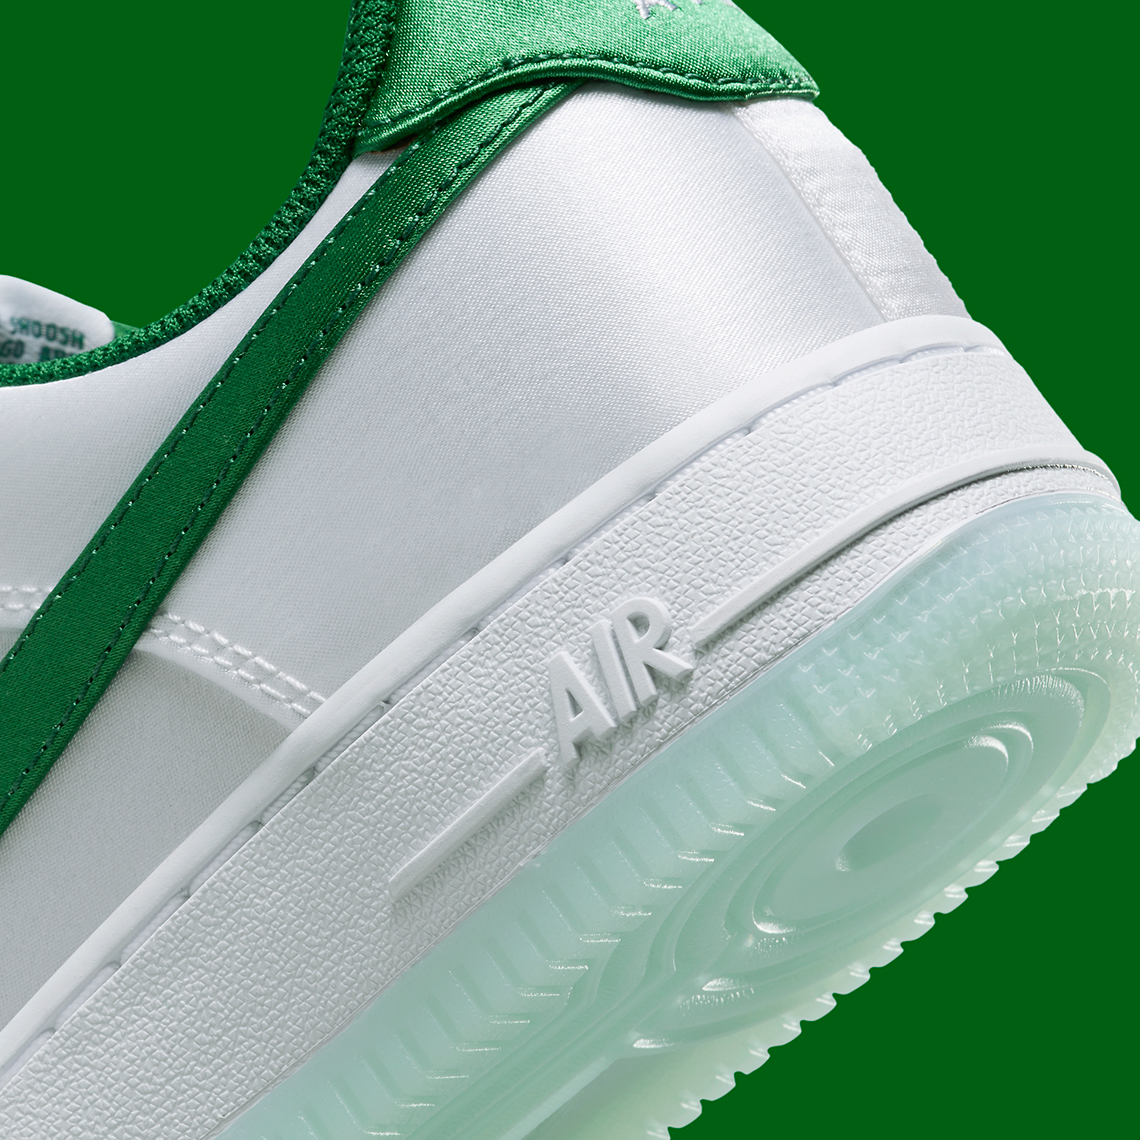 Satin Pine Green: Nike Air Force 1 Low Satin “Pine Green” shoes